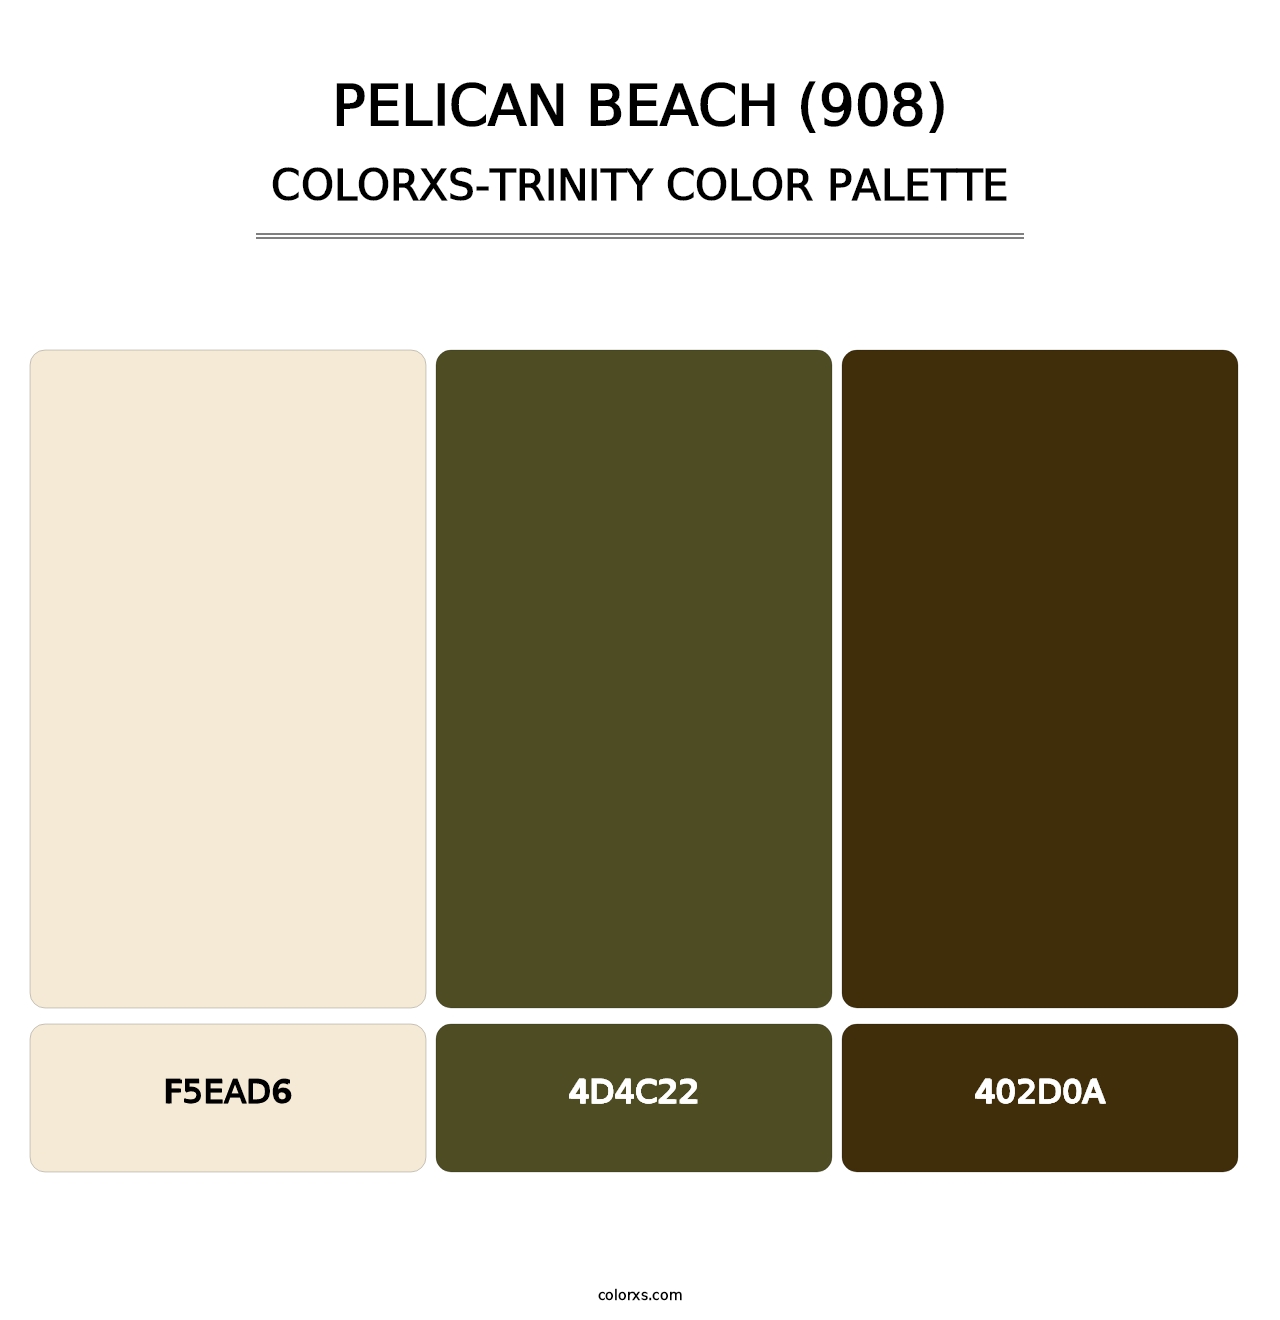 Pelican Beach (908) - Colorxs Trinity Palette